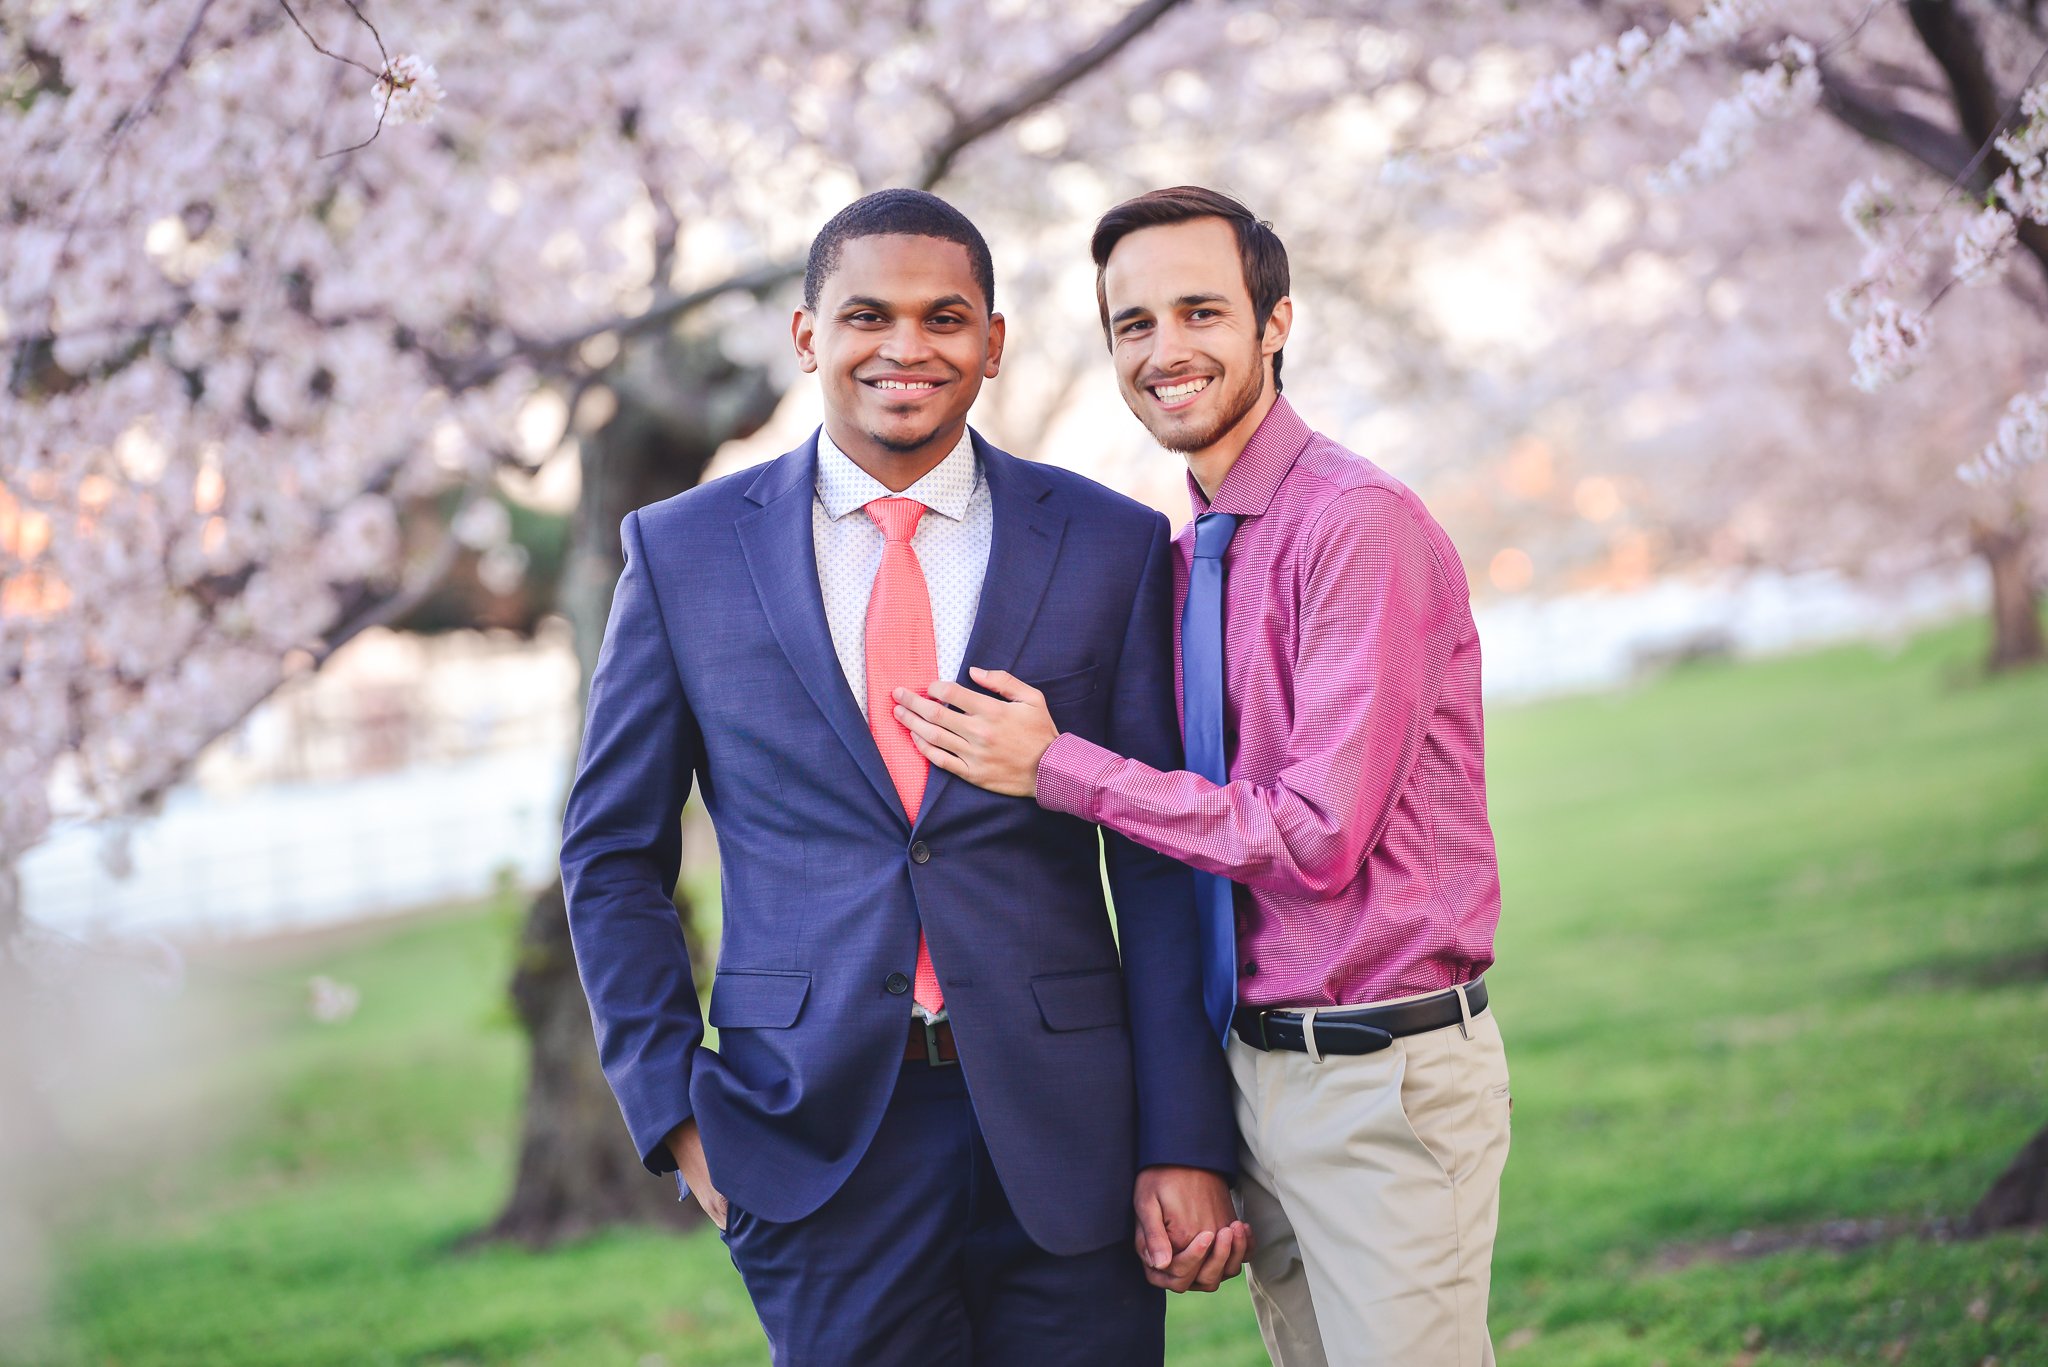 Couple's photo session @ Cherry blossoms in Washington DC - DC MD VA portrait photographer.